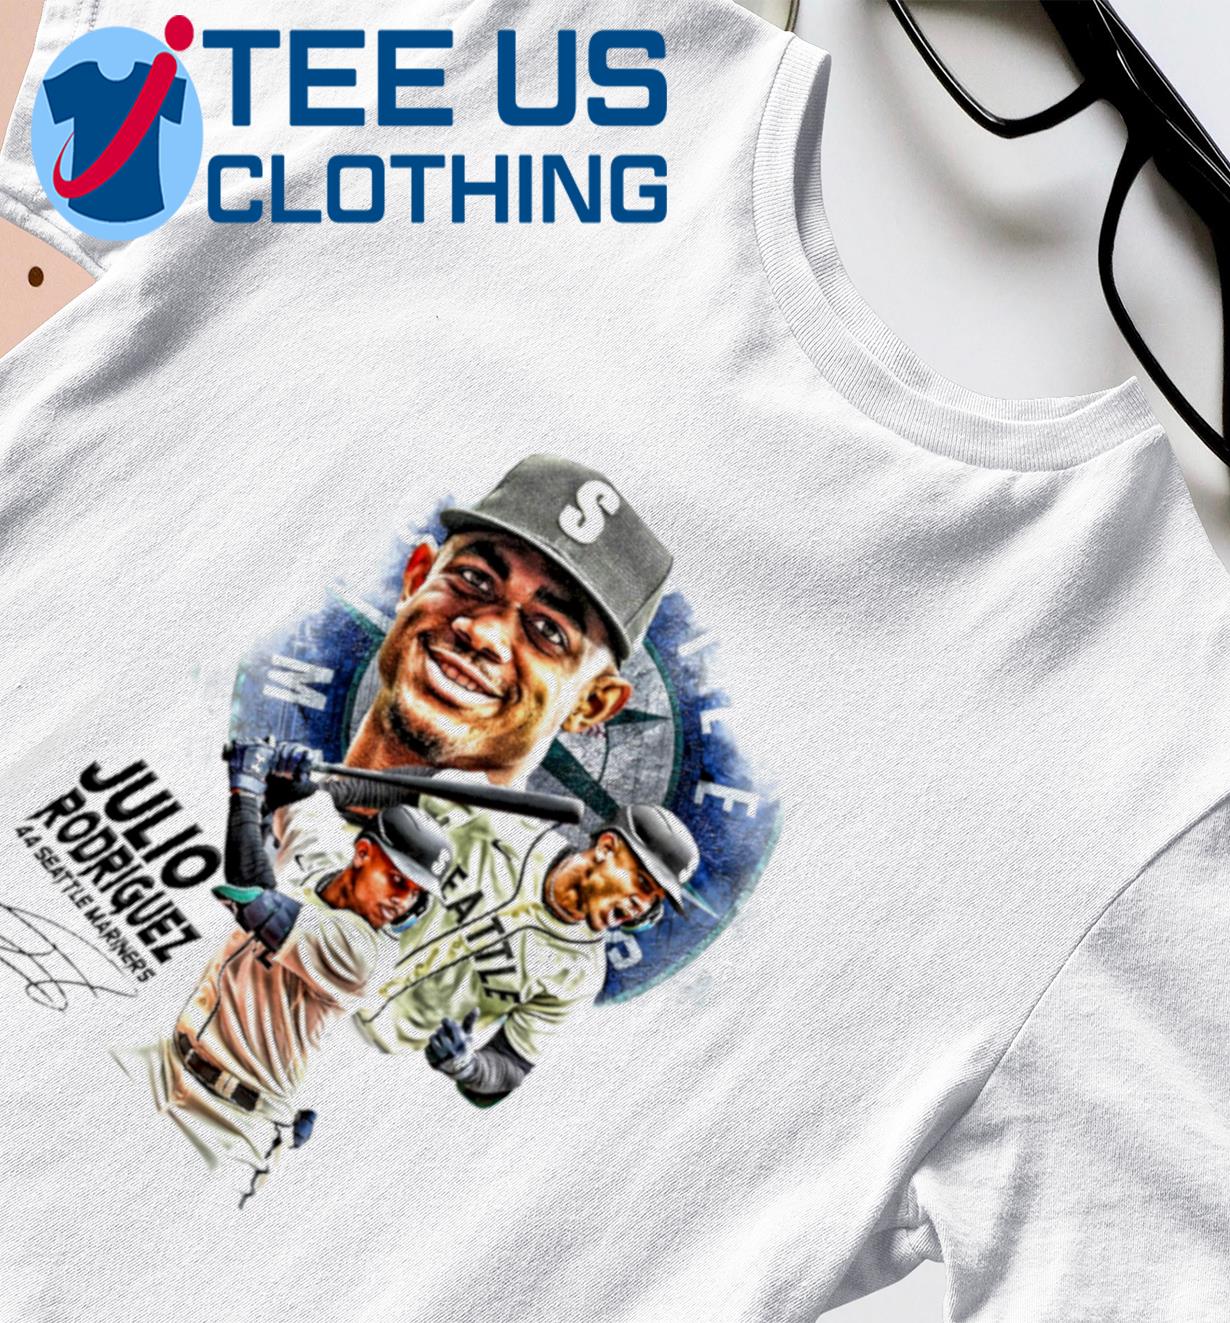 Julio Rodriguez Seattle Mariners Baseball T Shirt - Teeholly